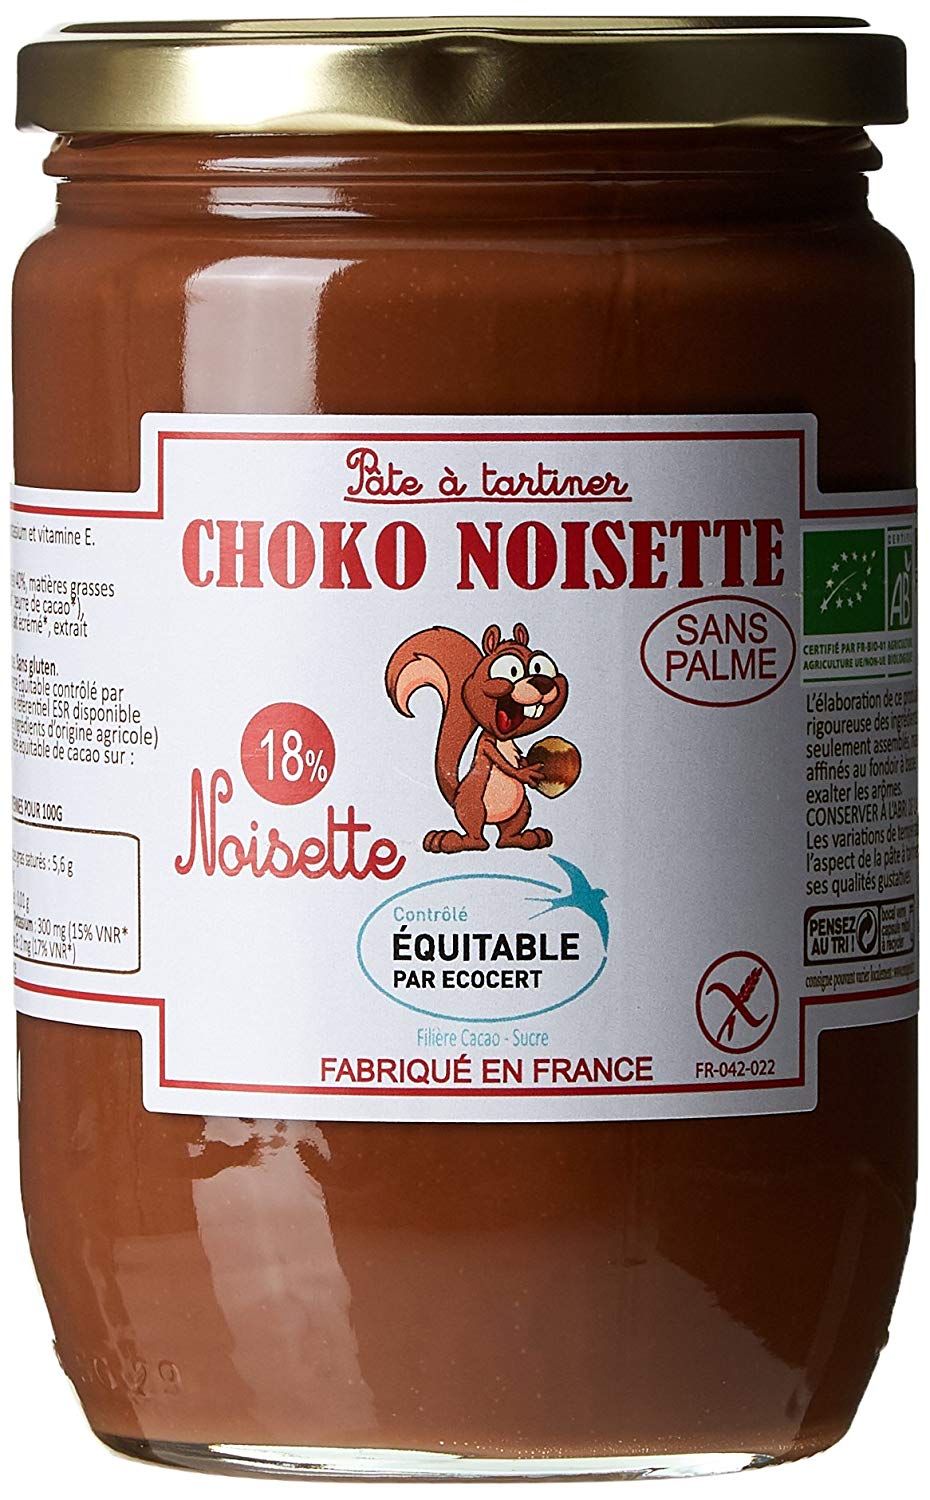 NOISERAIE PRODUCTIONS - Choko Noisettes 18% Noisettes 